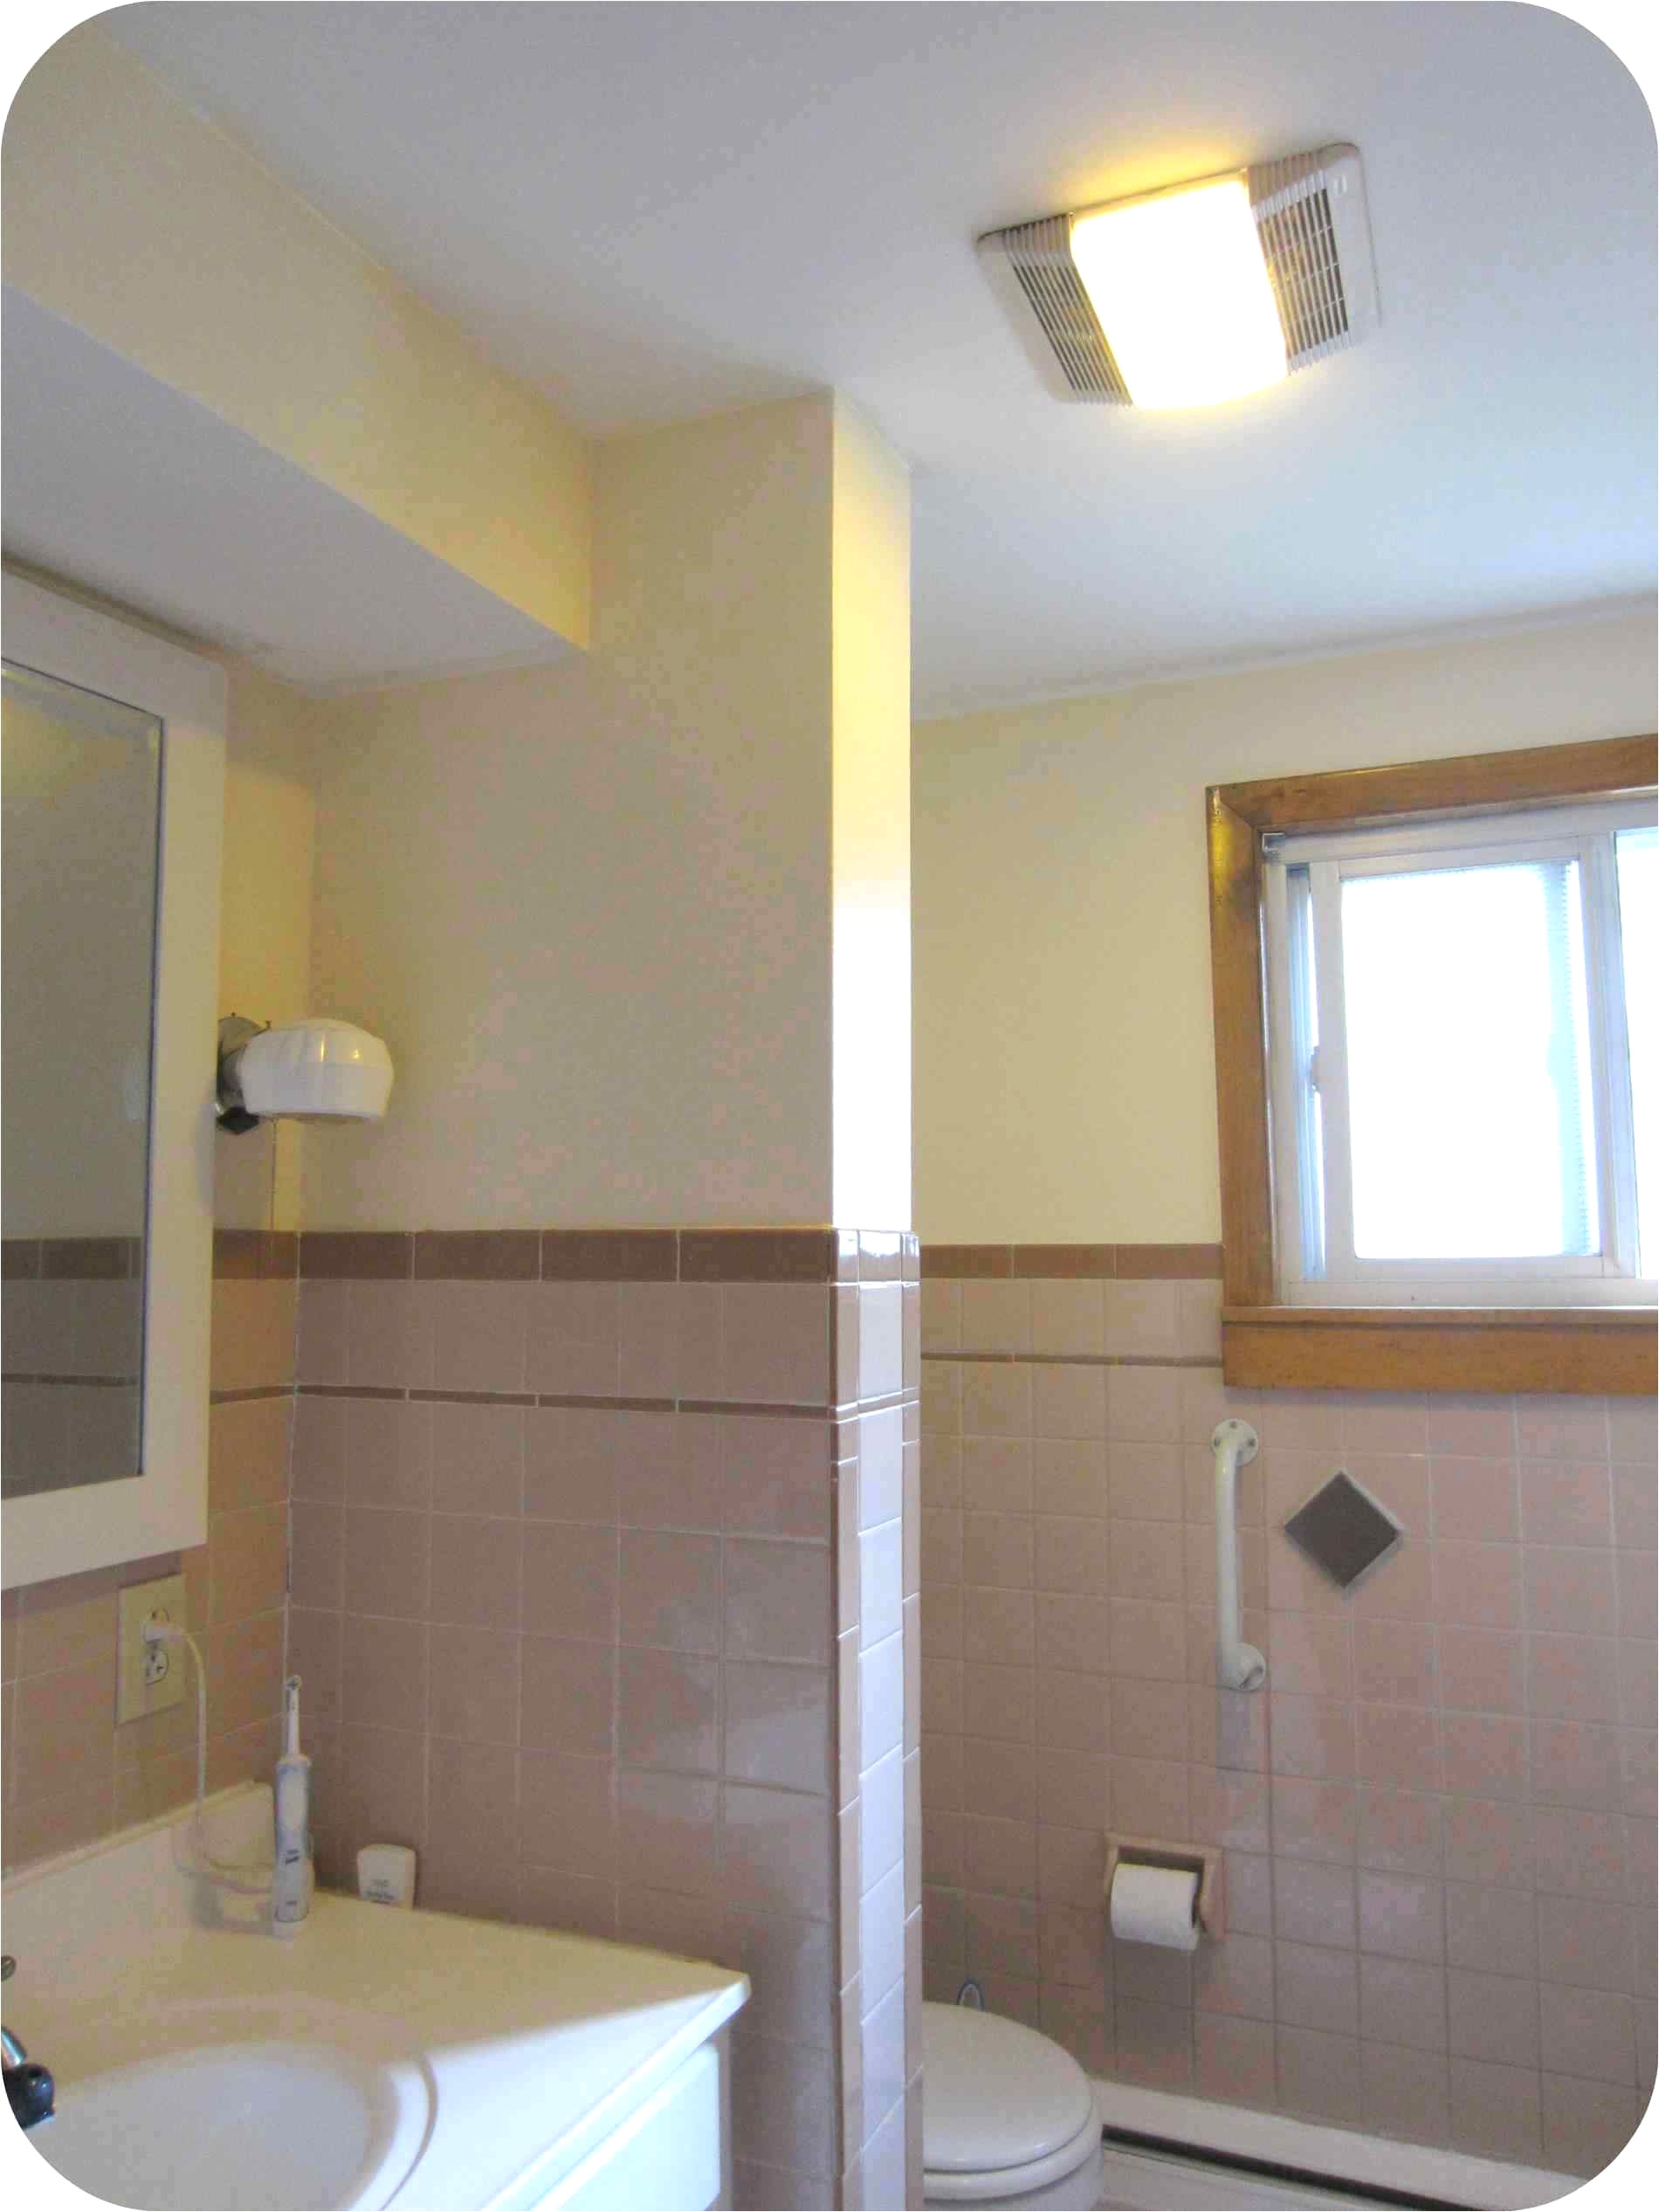 ceiling vent fan lovely famous lowes bathroom exhaust fans ideas bathroom with bathtub